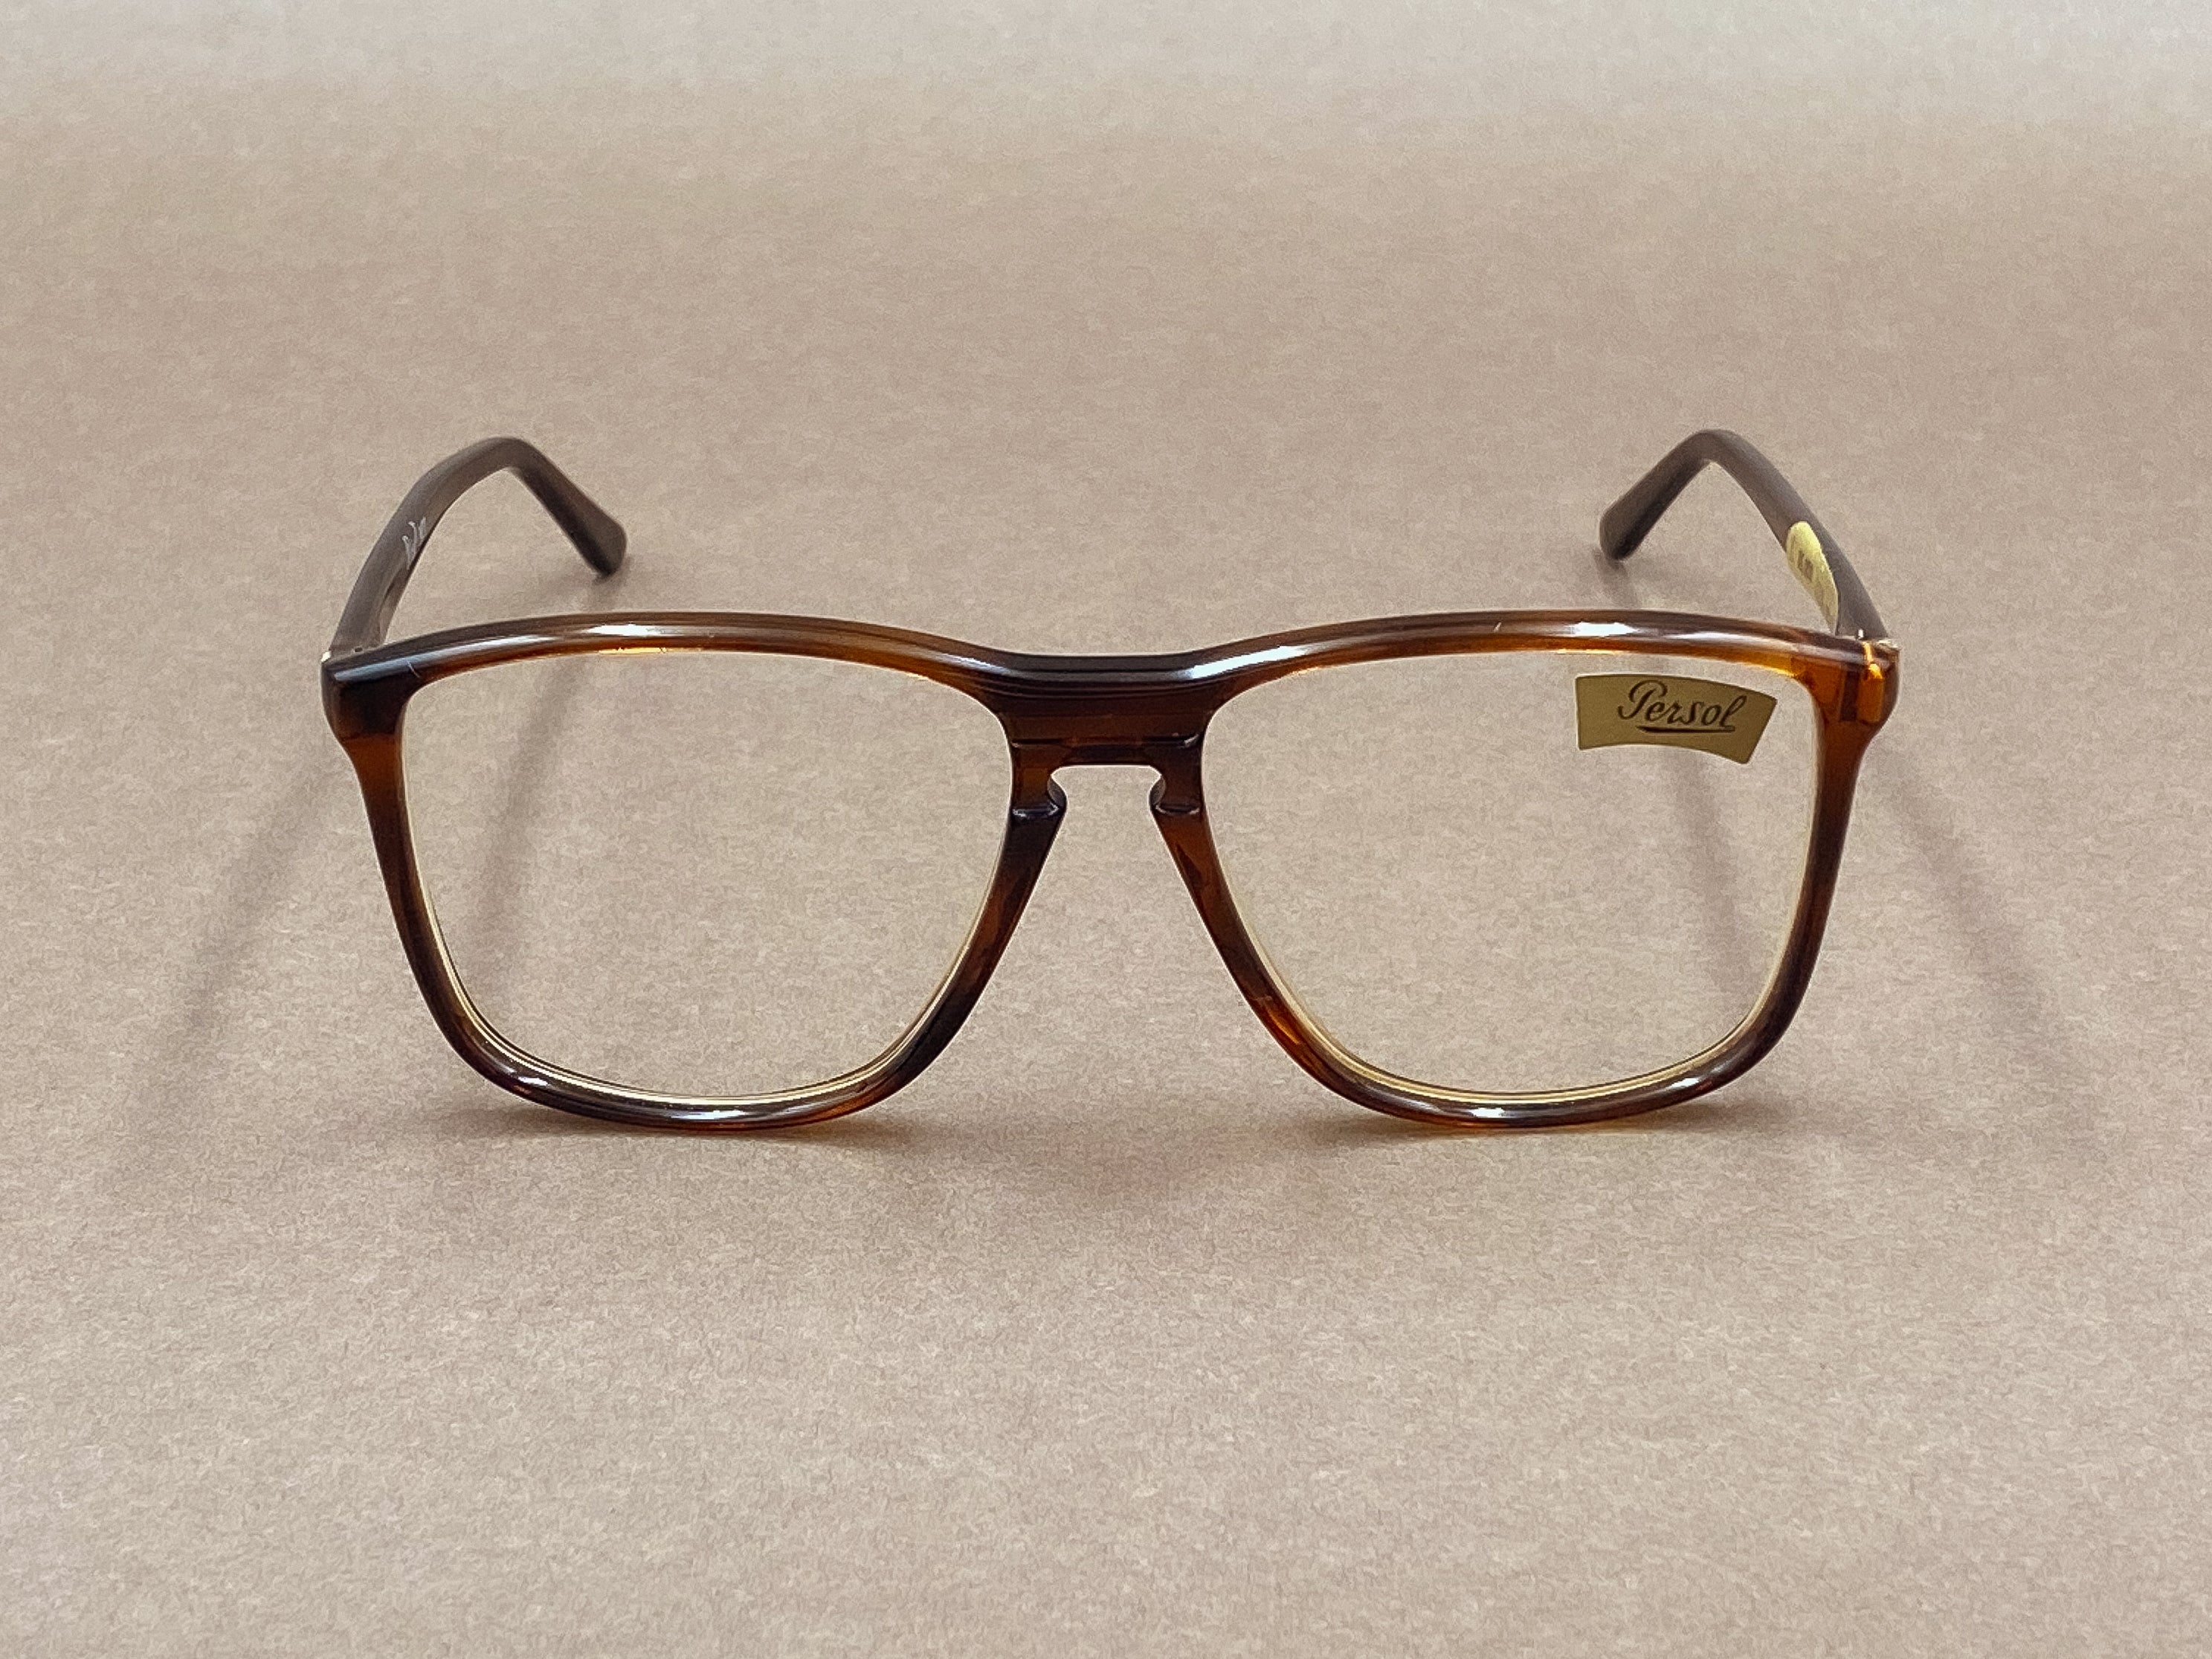 Persol Ratti 09153 eyeglasses